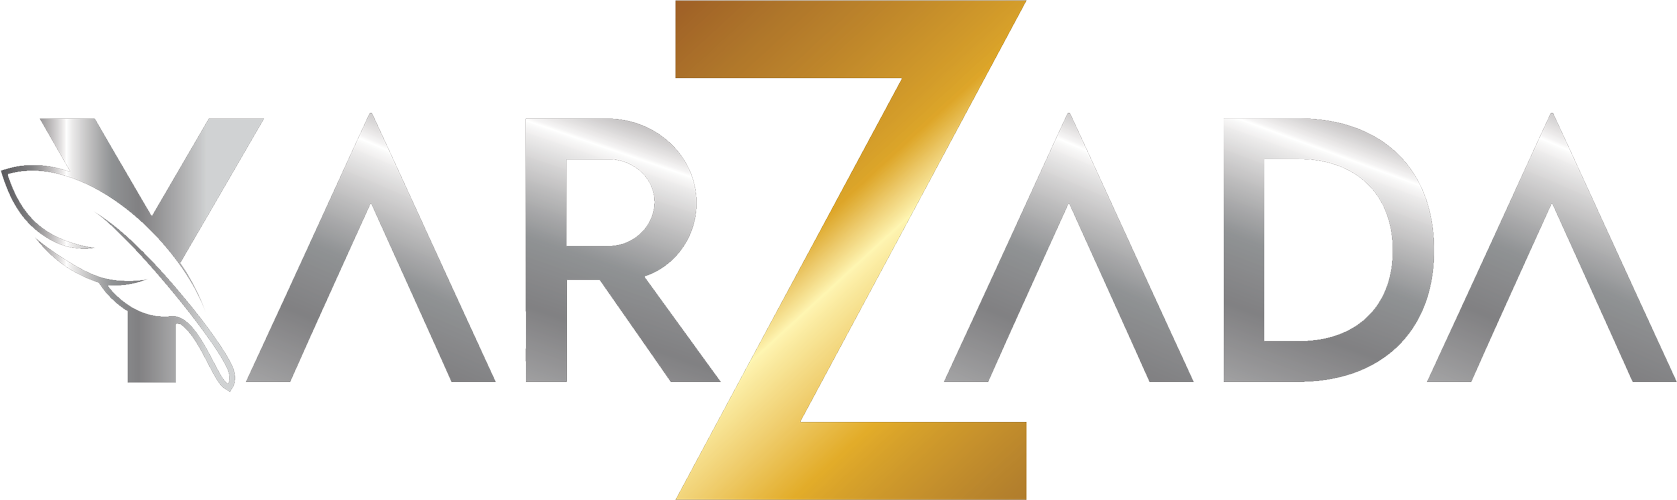 yarzada-logo